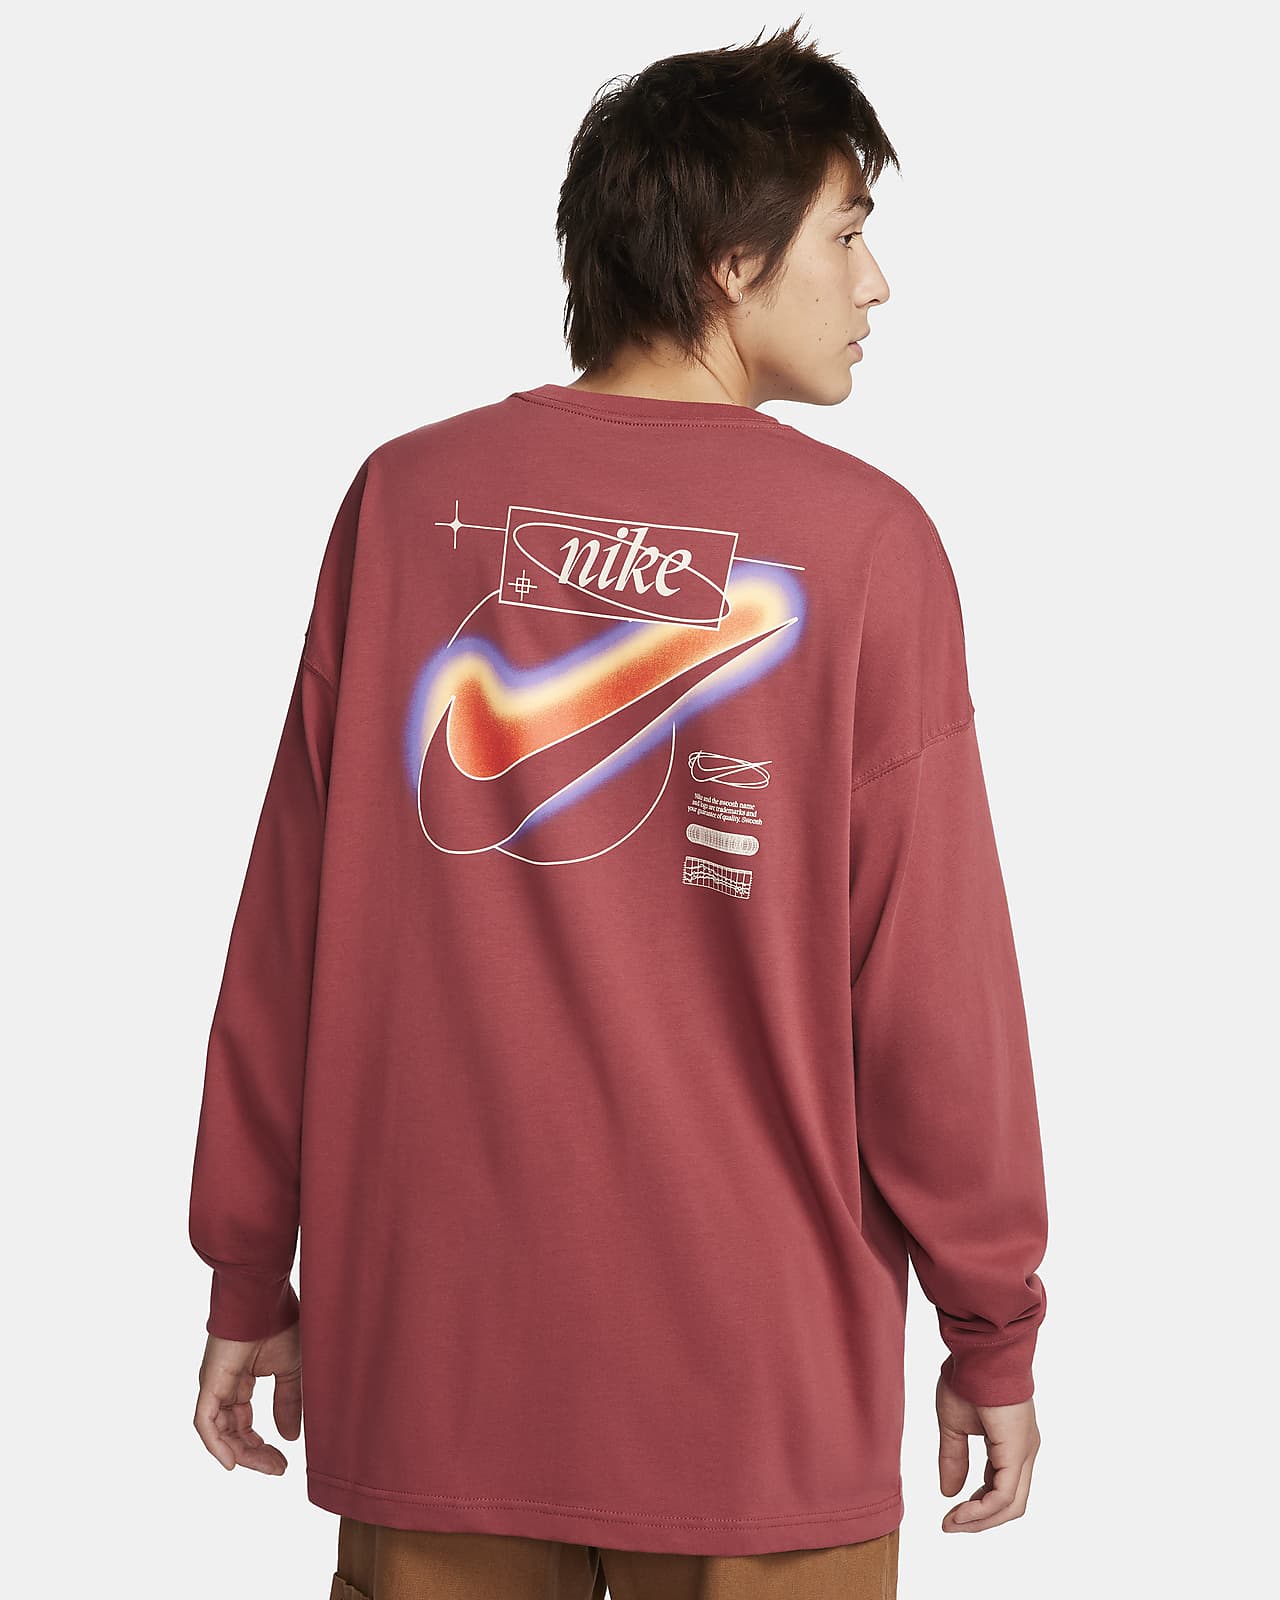 Nike Men's Shirt - Red - XS